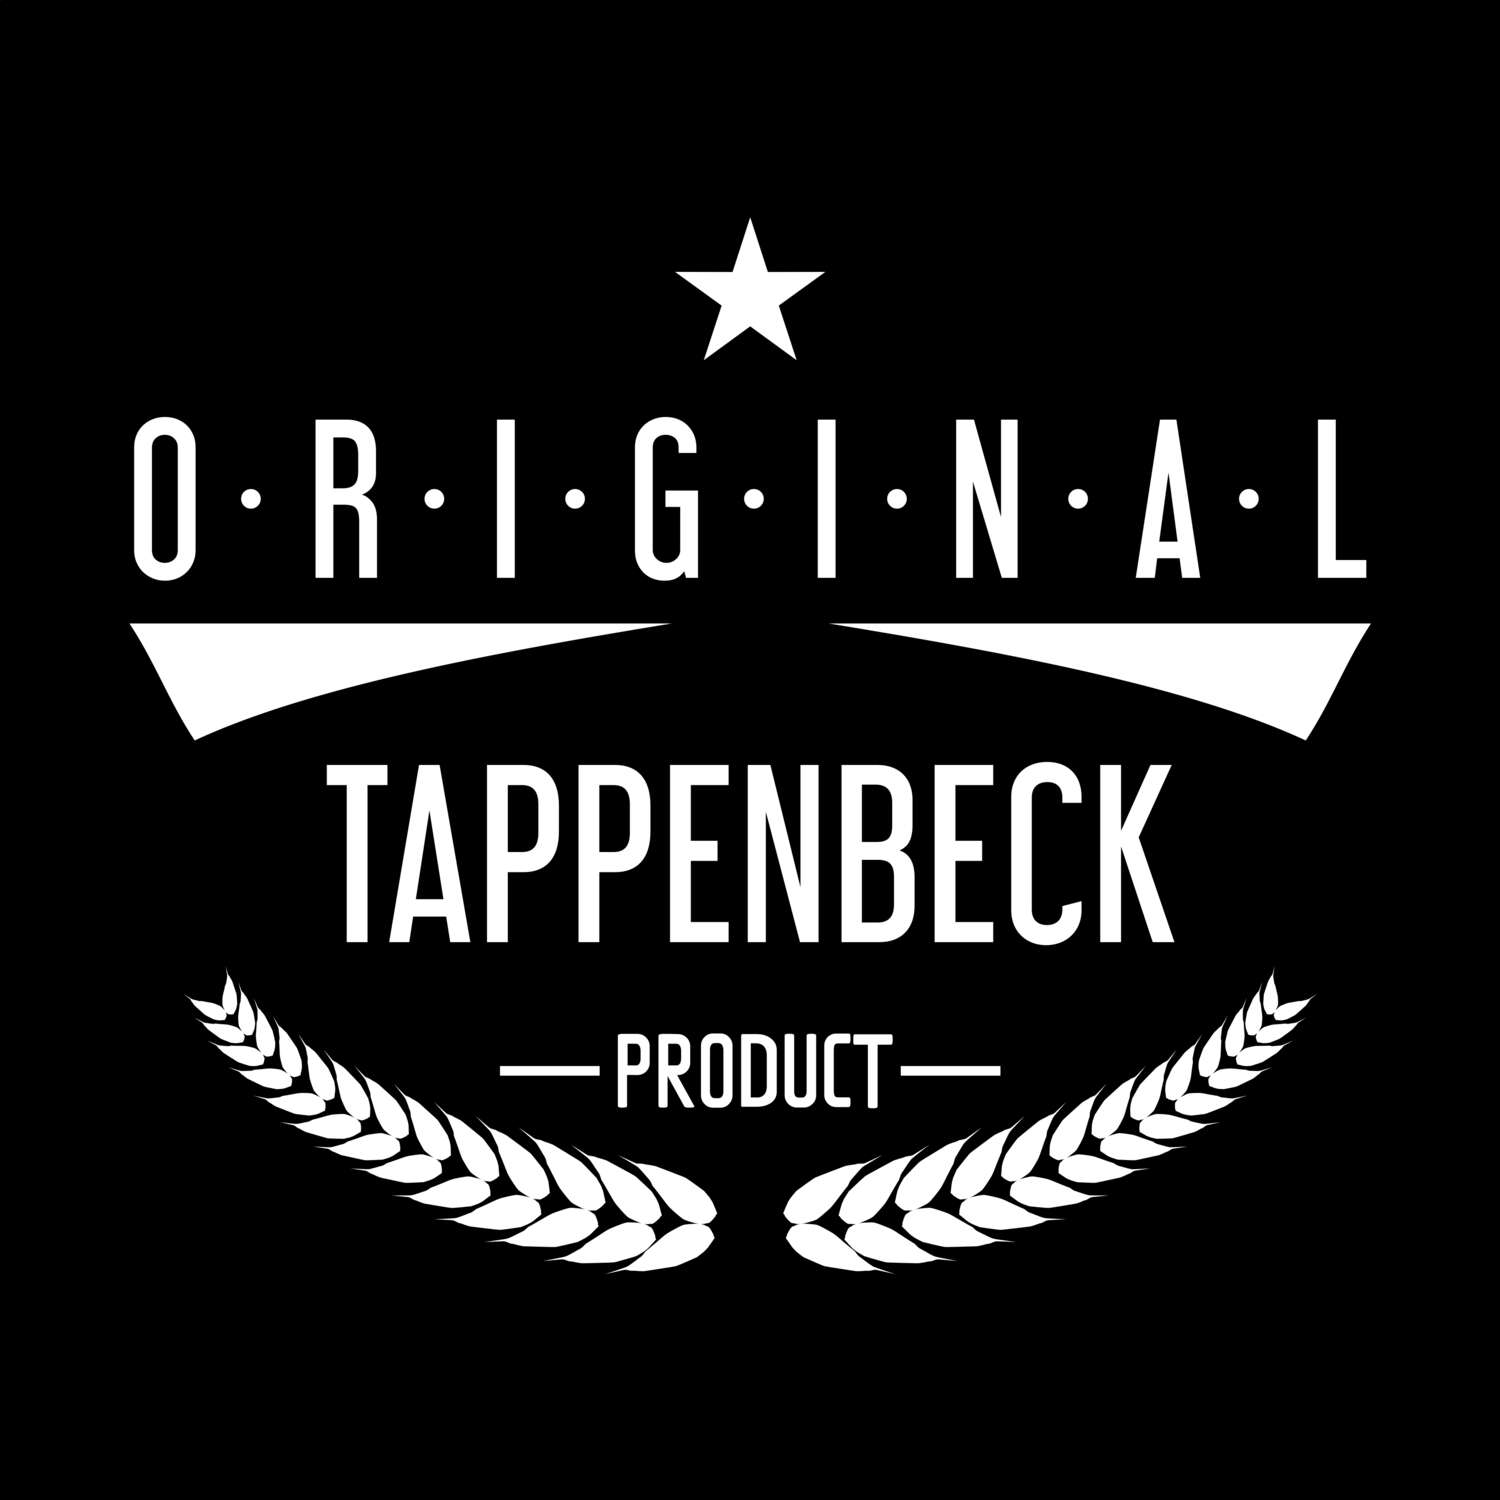 Tappenbeck T-Shirt »Original Product«